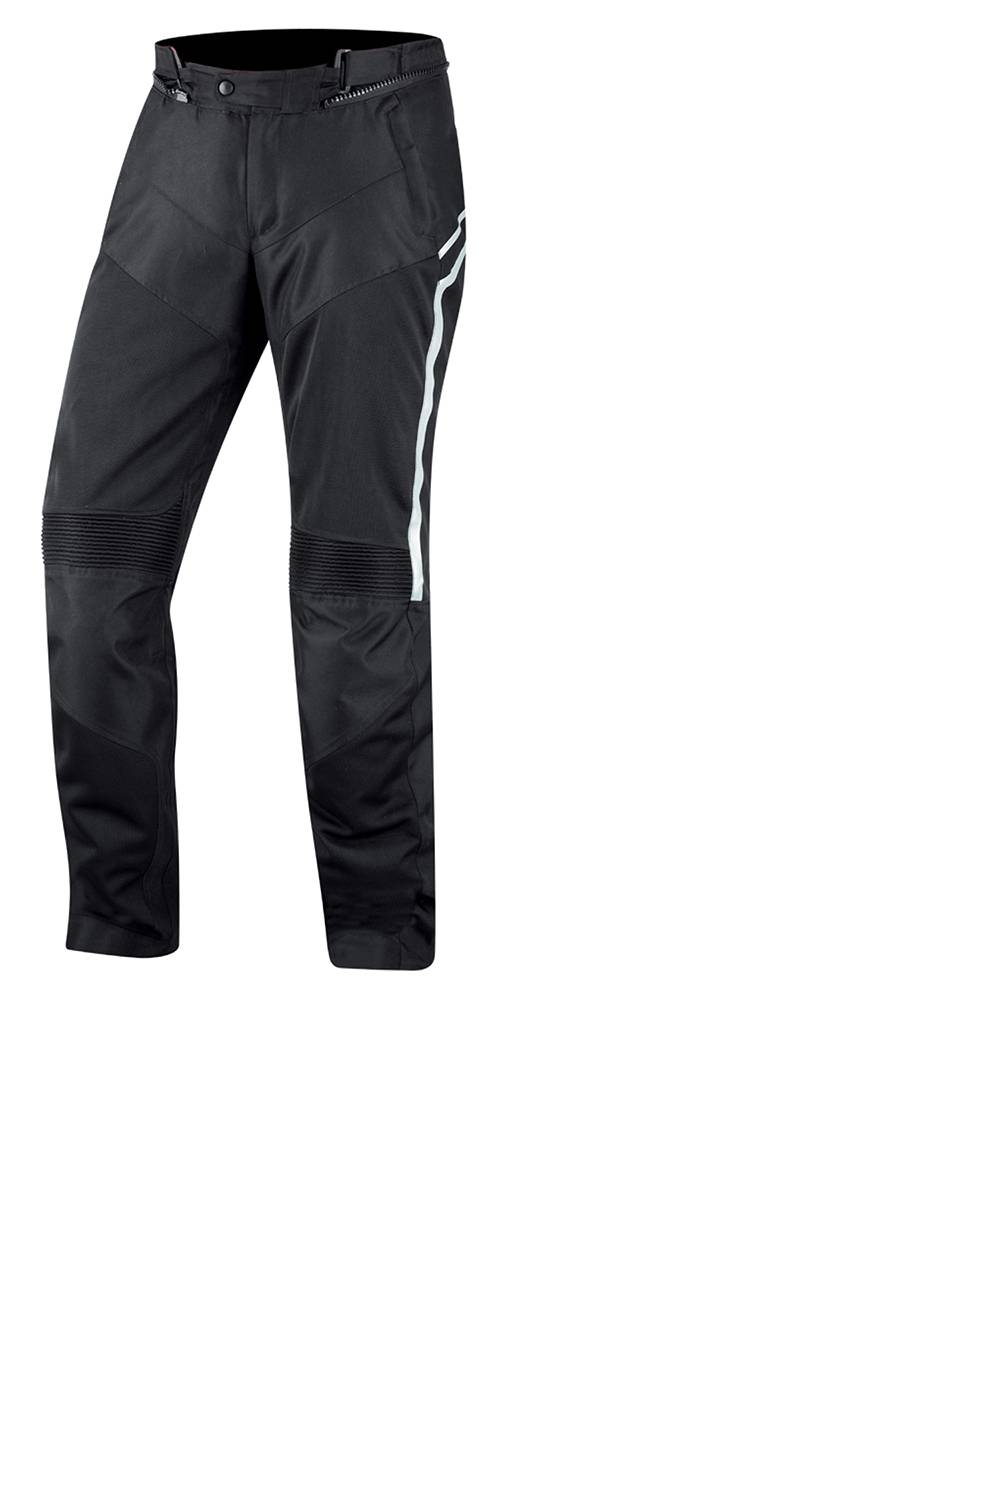 Ixs - Pantalón Moto Archer Negro